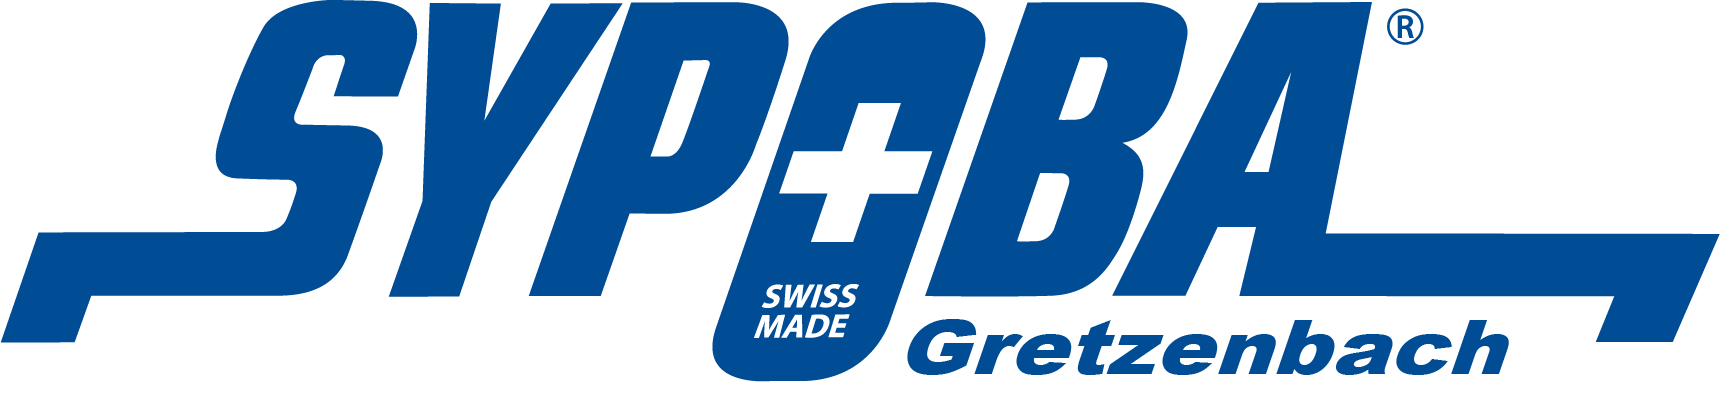 Sypoba_Logo_Gretzenbach